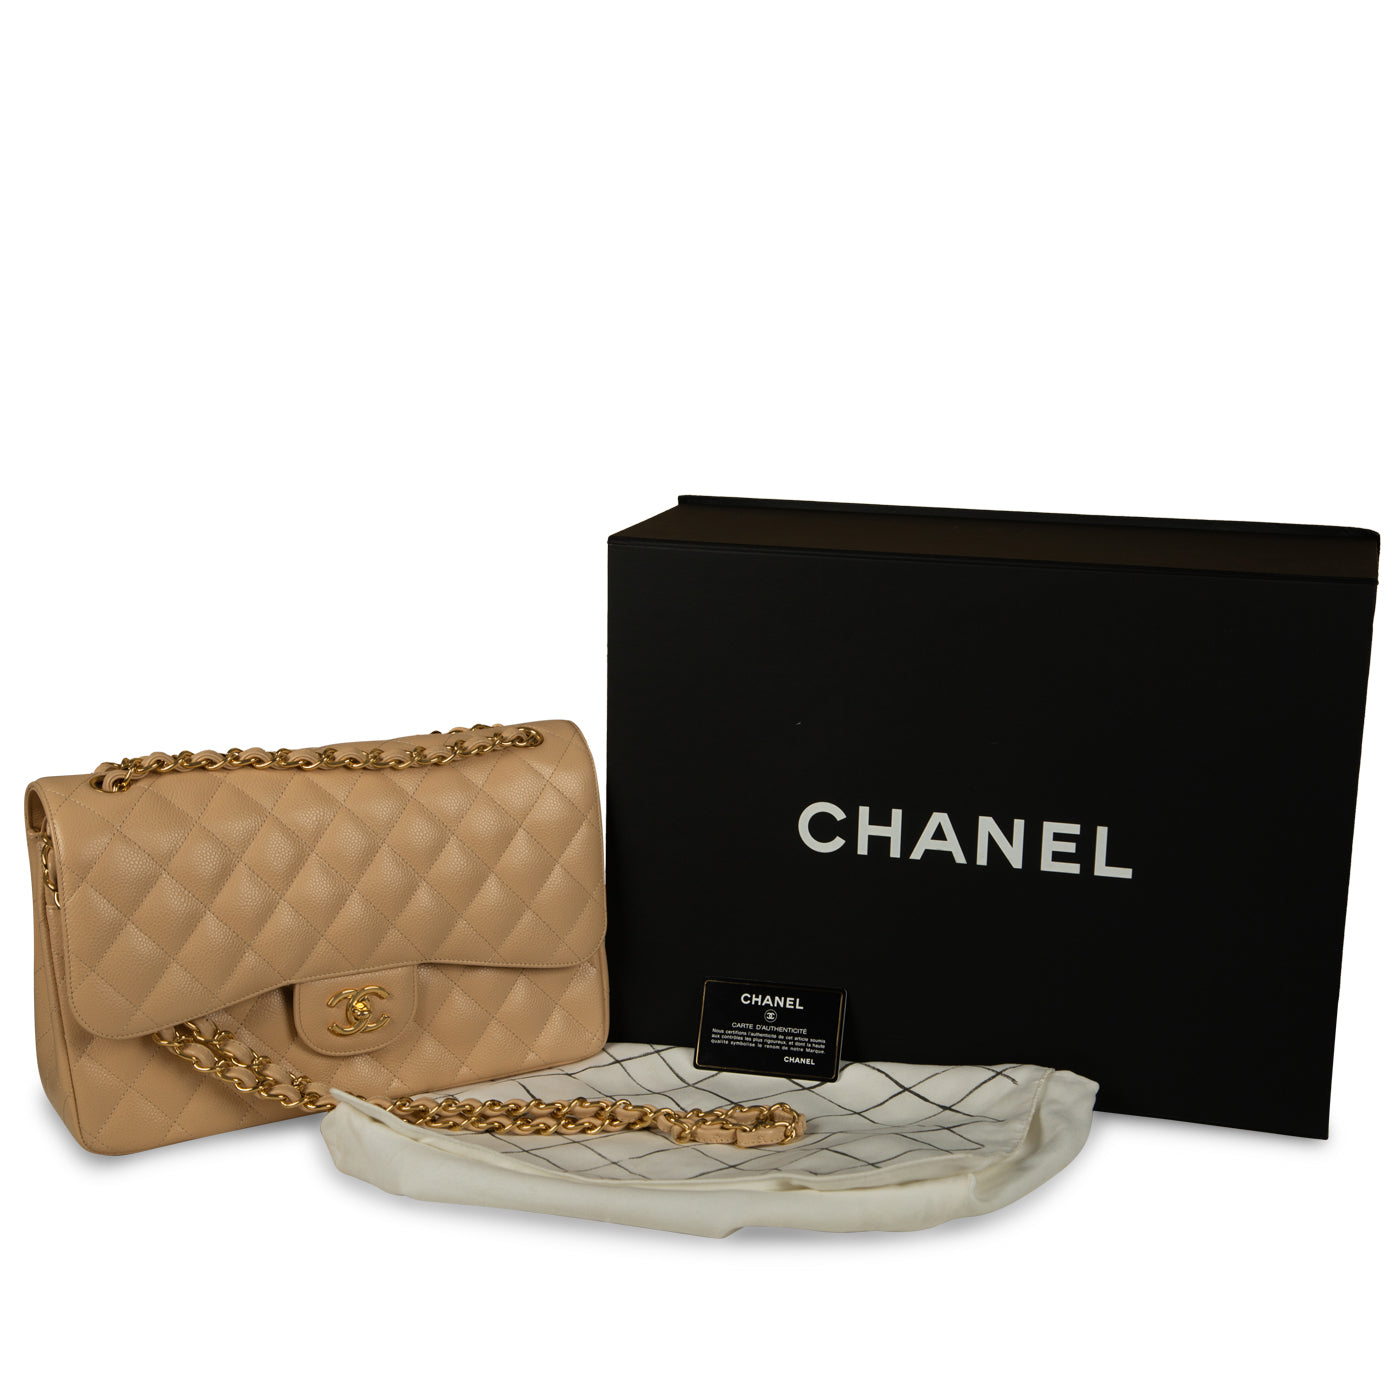 Chanel - Classic Flap Bag - Jumbo - Beige - caviar - GHW